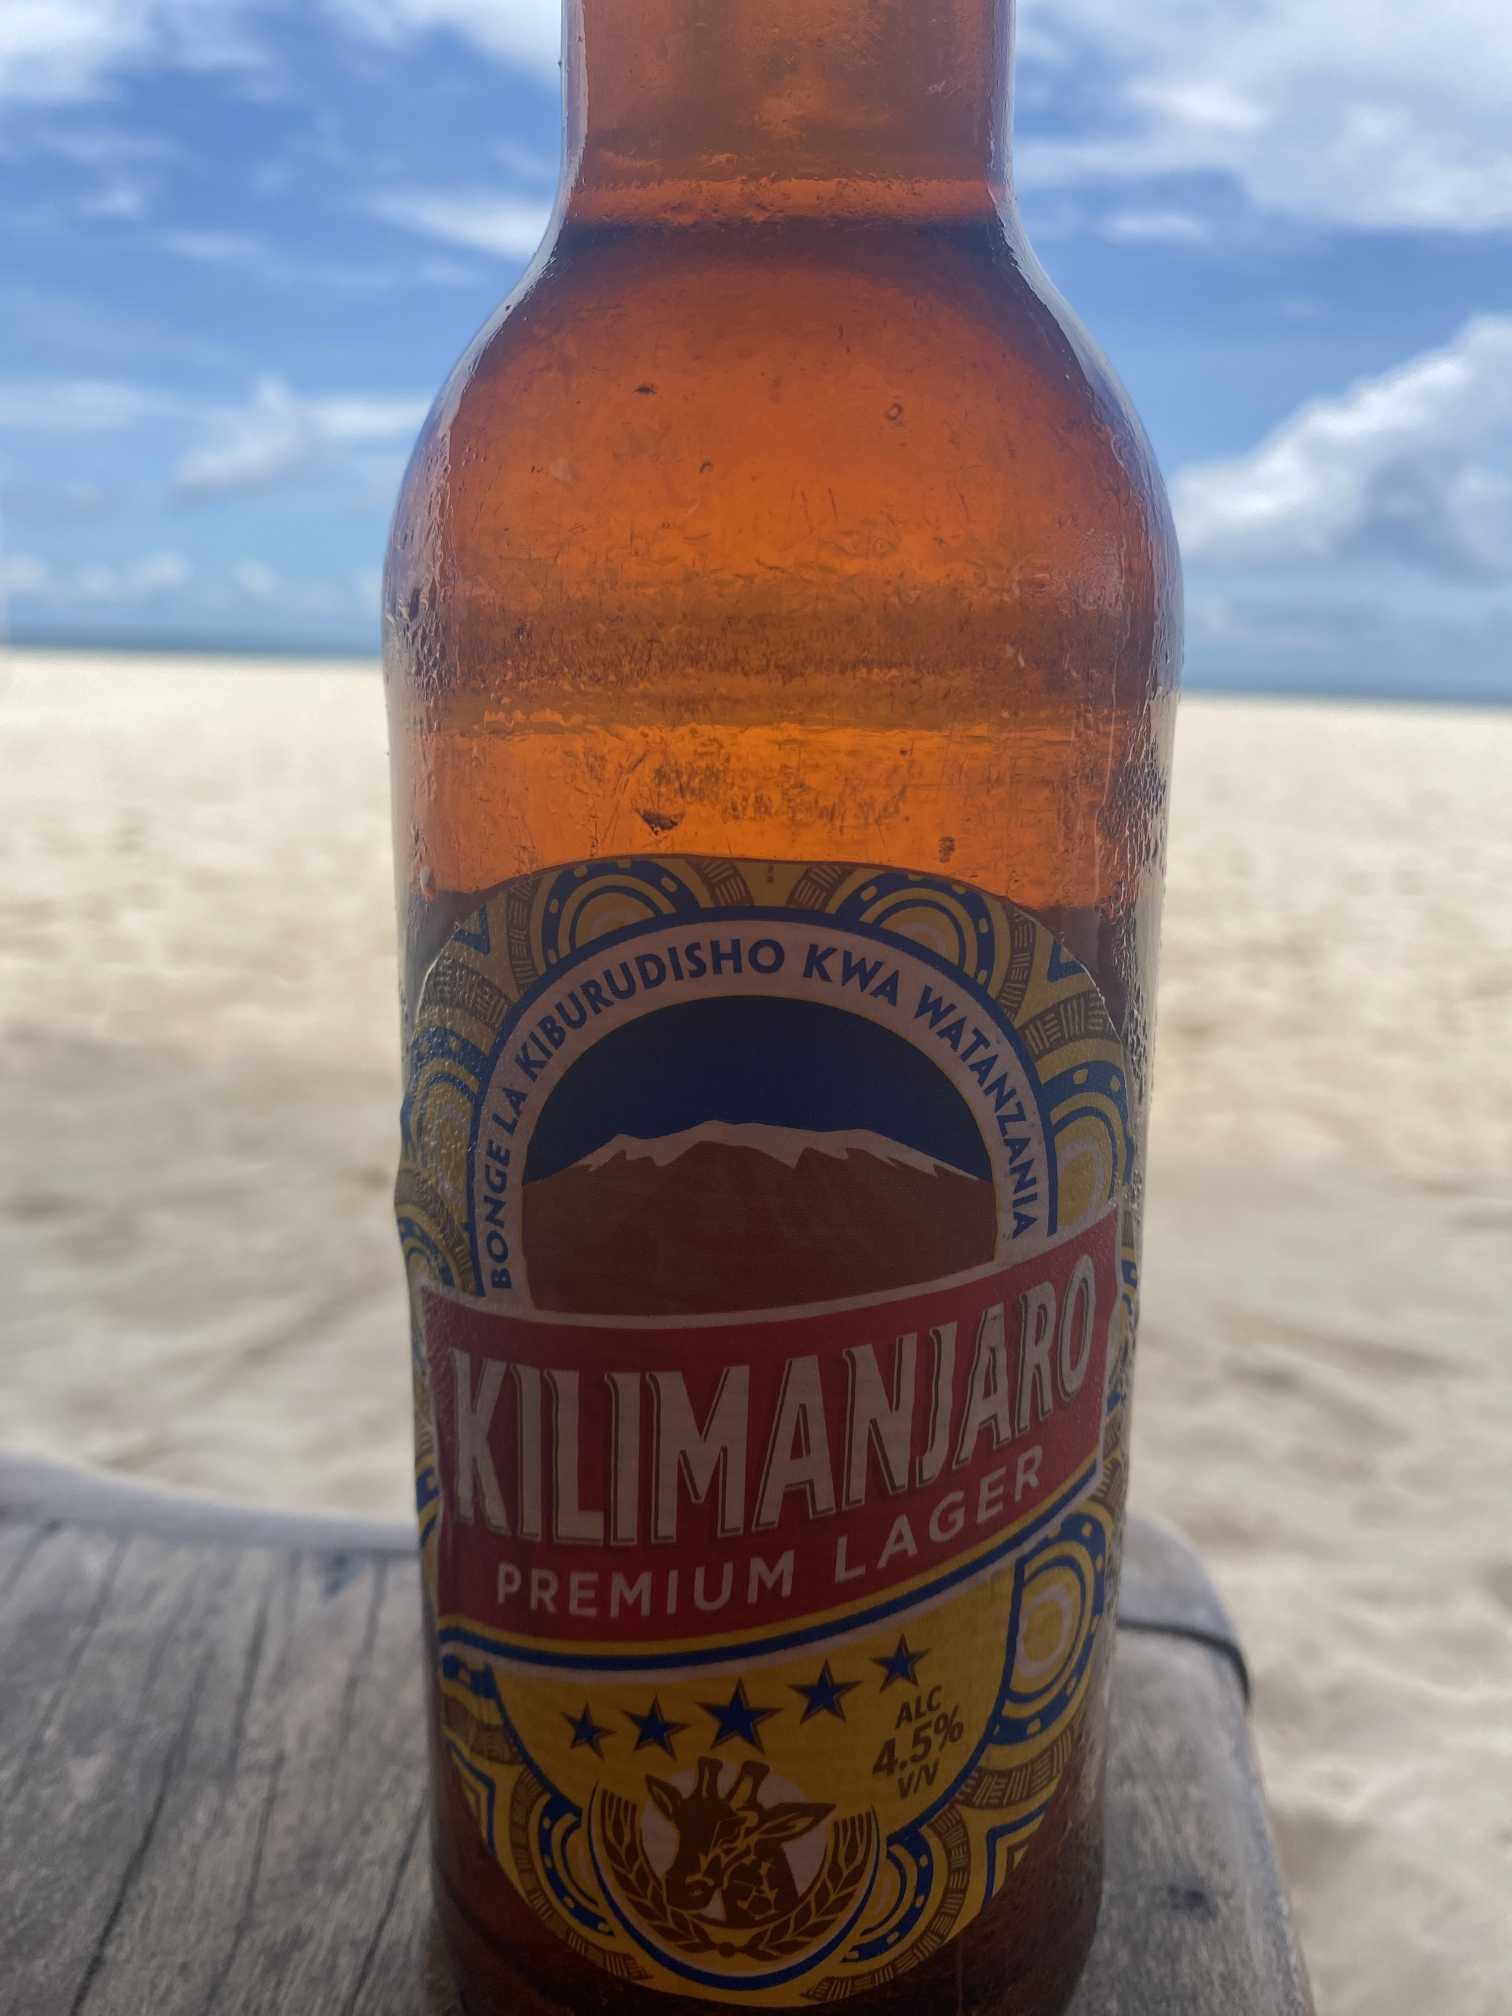 Kilimanjaro Restaurant